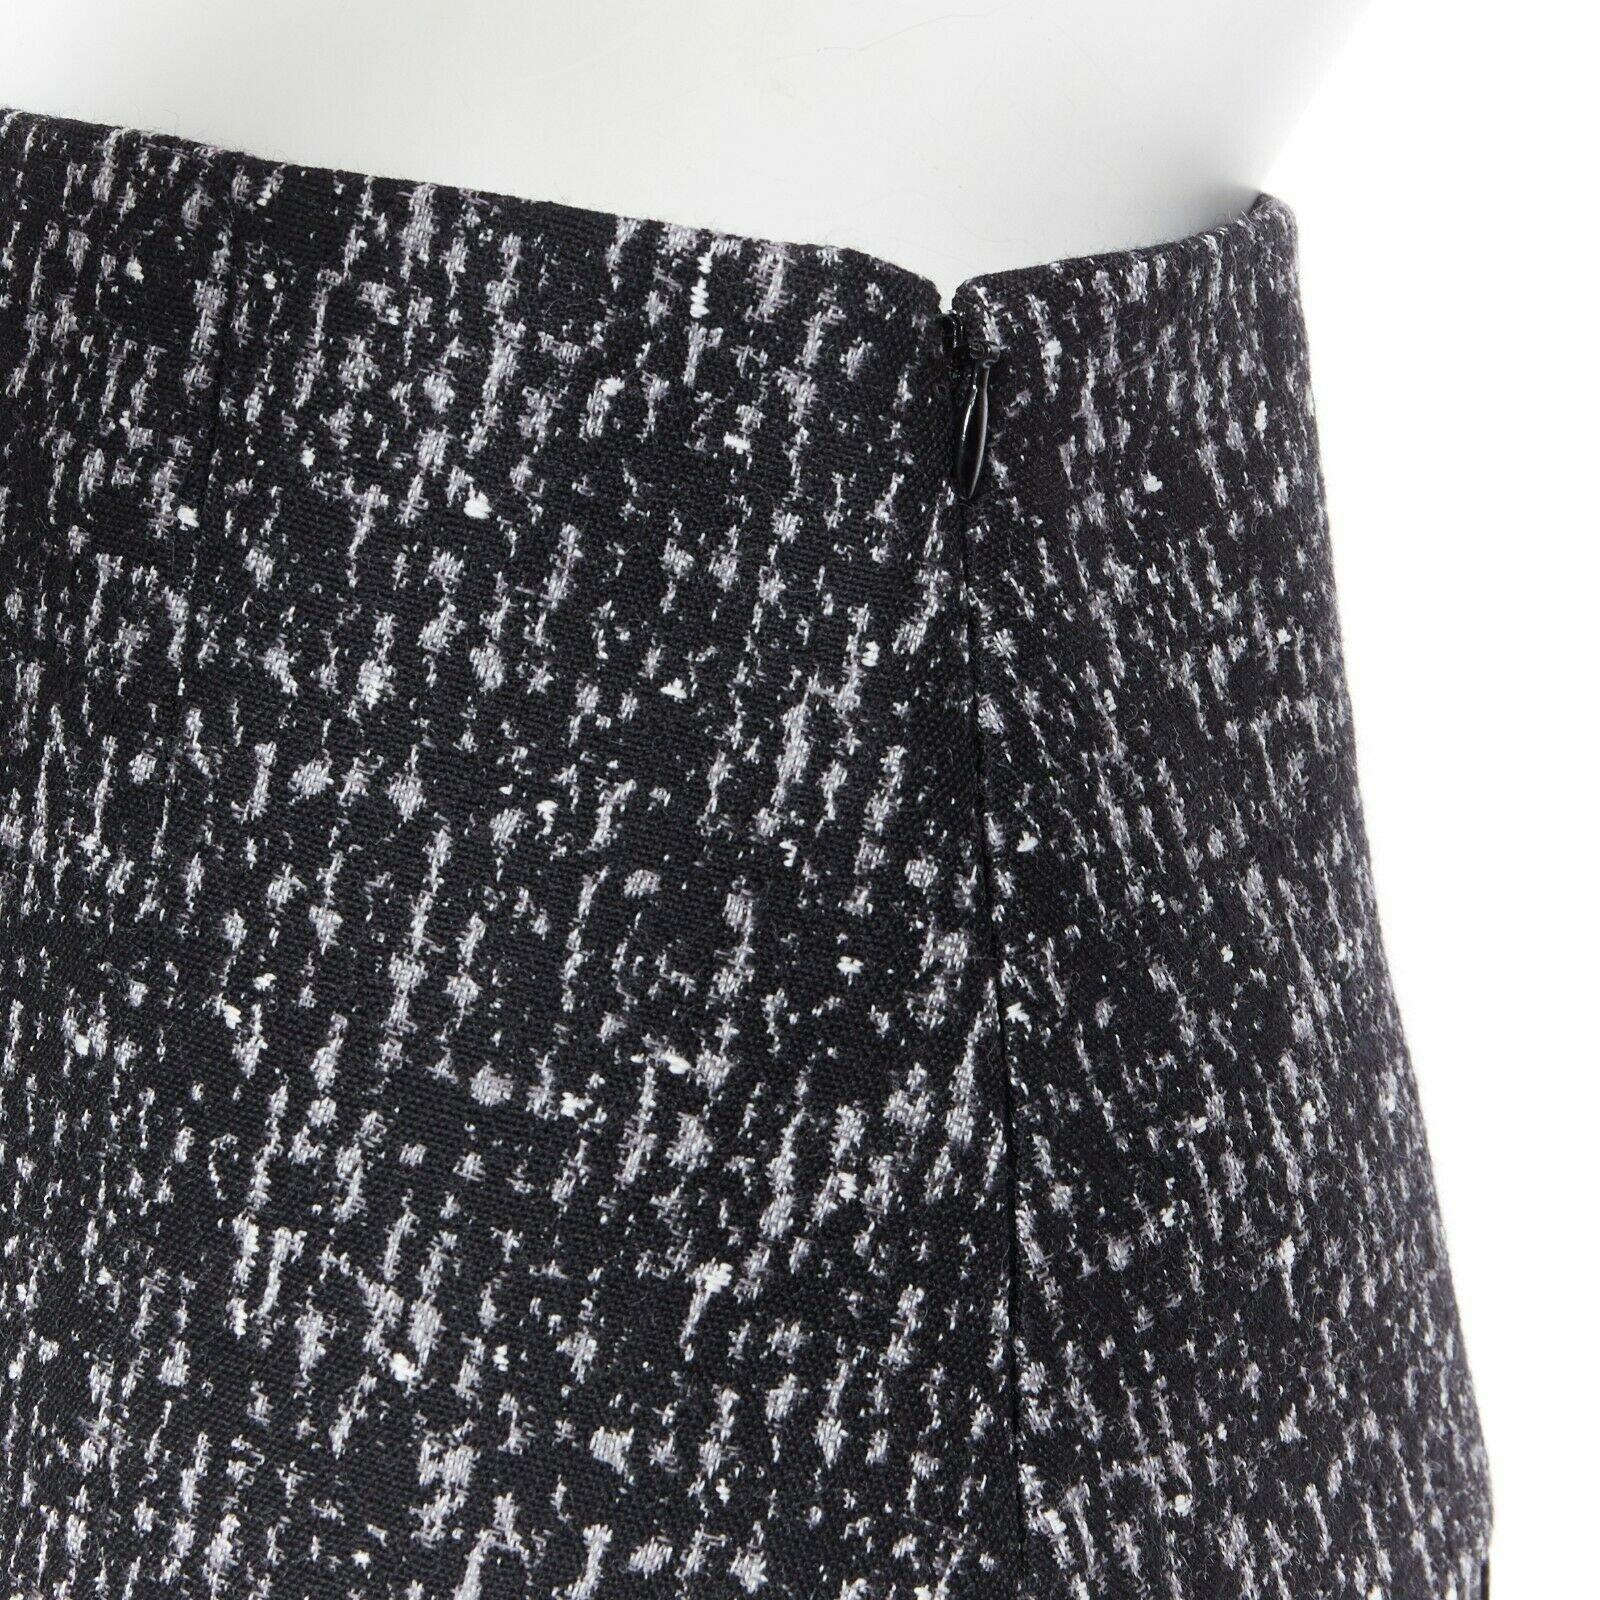 MICHAEL KORS black white 100% silk marble chiffon strips high-waist skirt US0 1